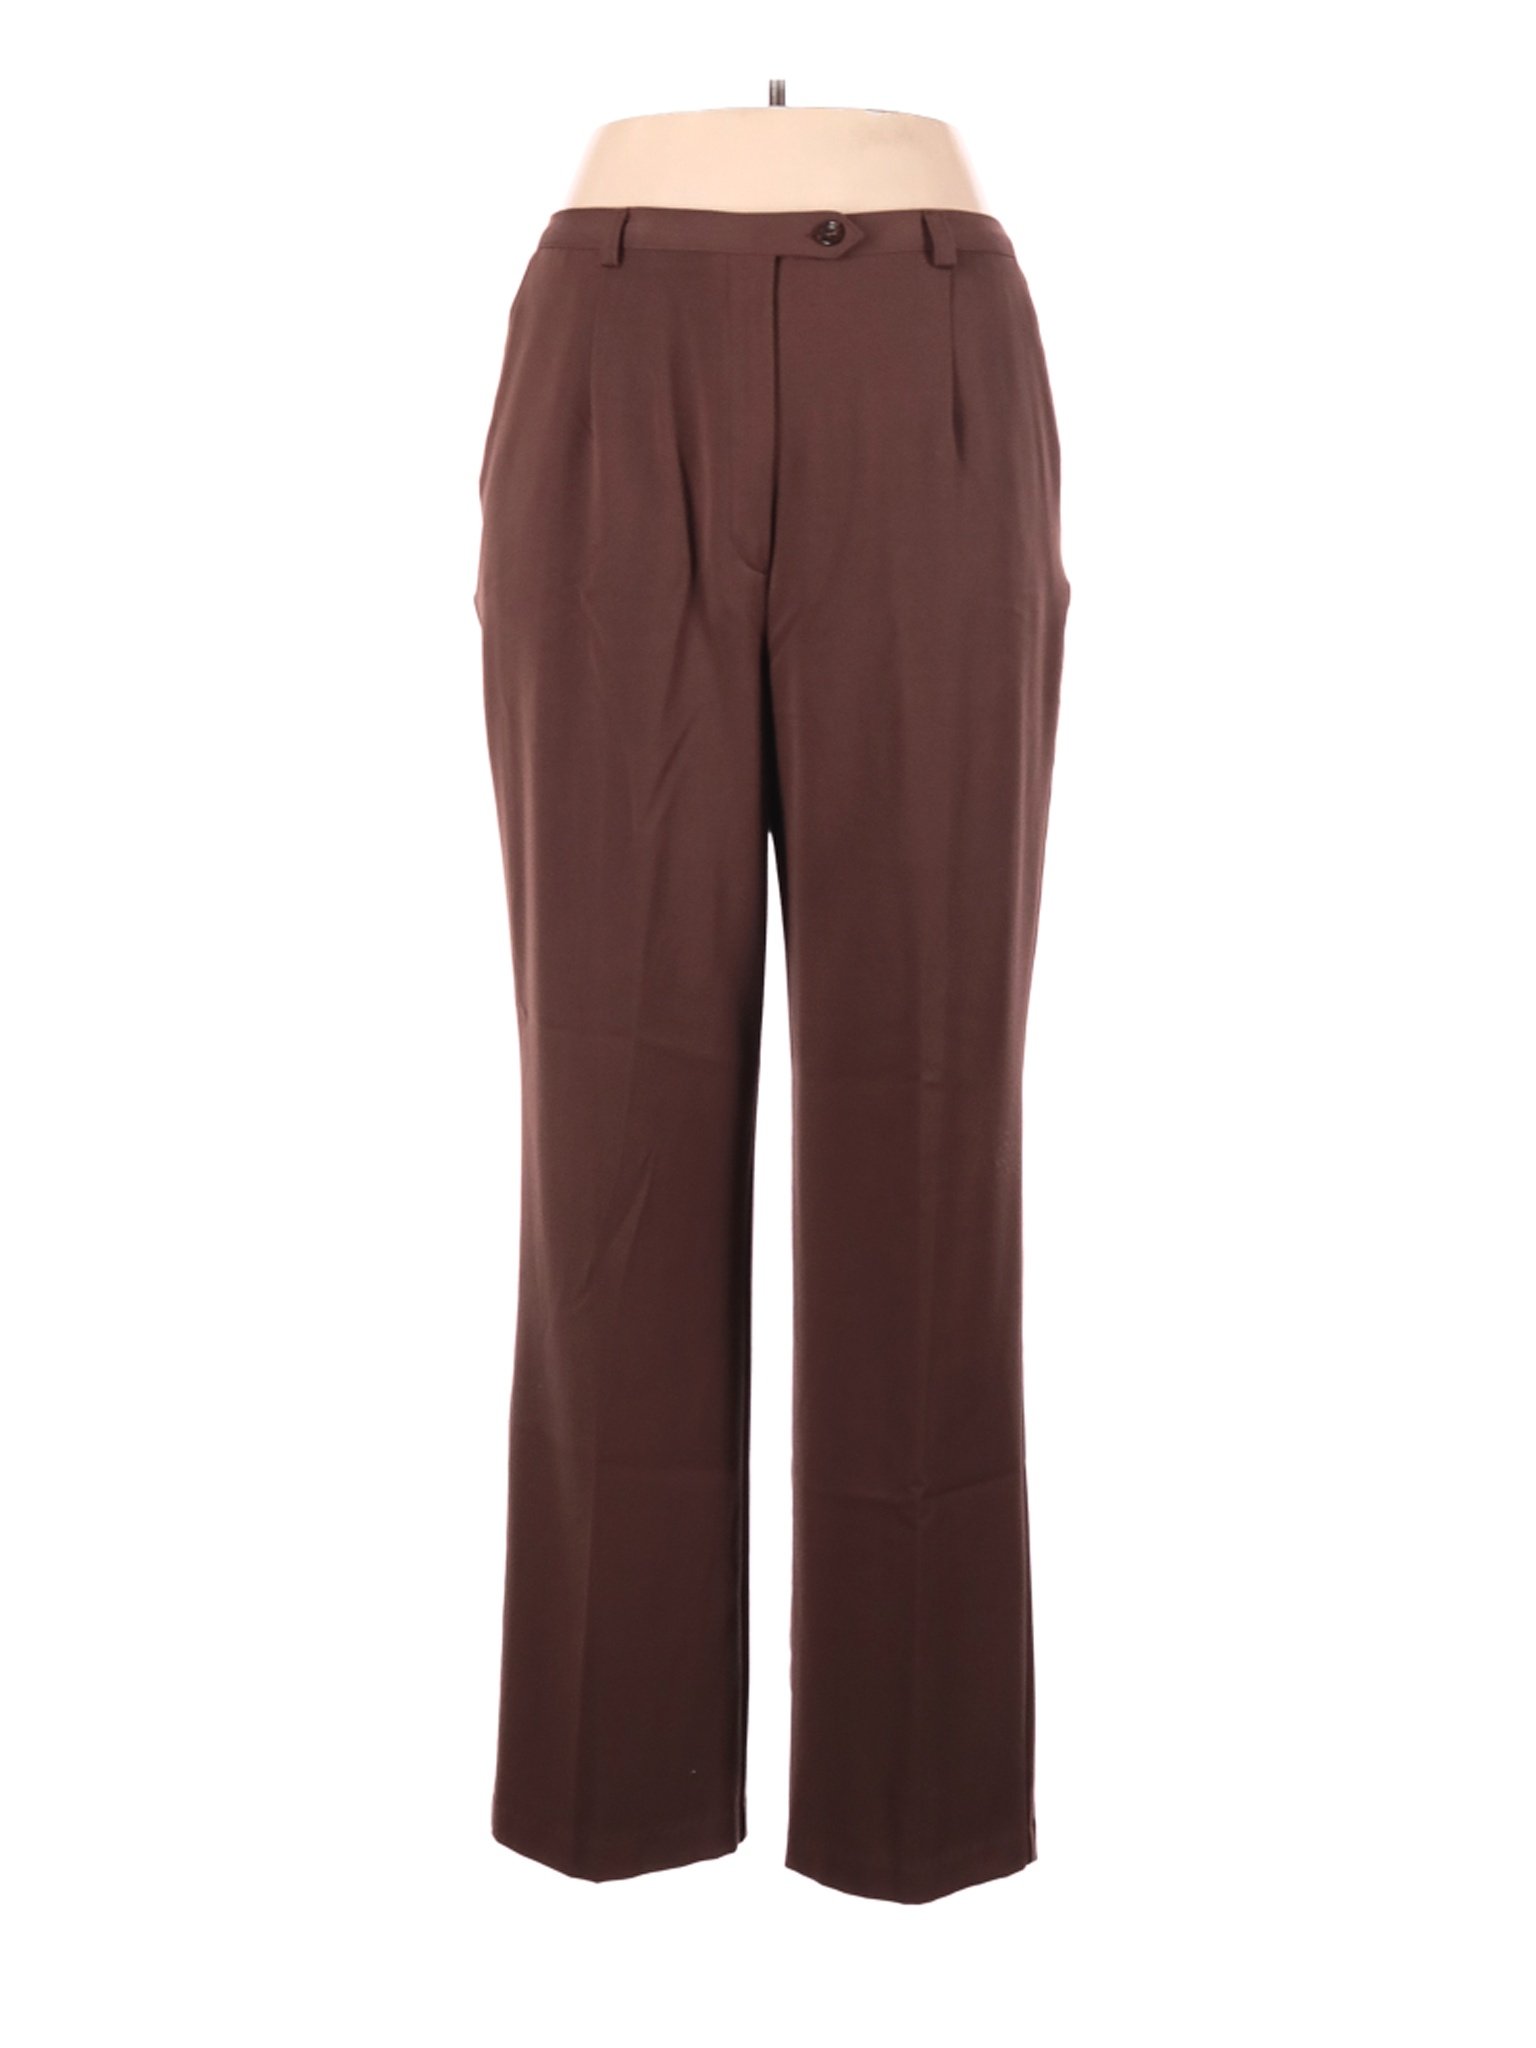 Sag Harbor Women Brown Dress Pants 14 | eBay